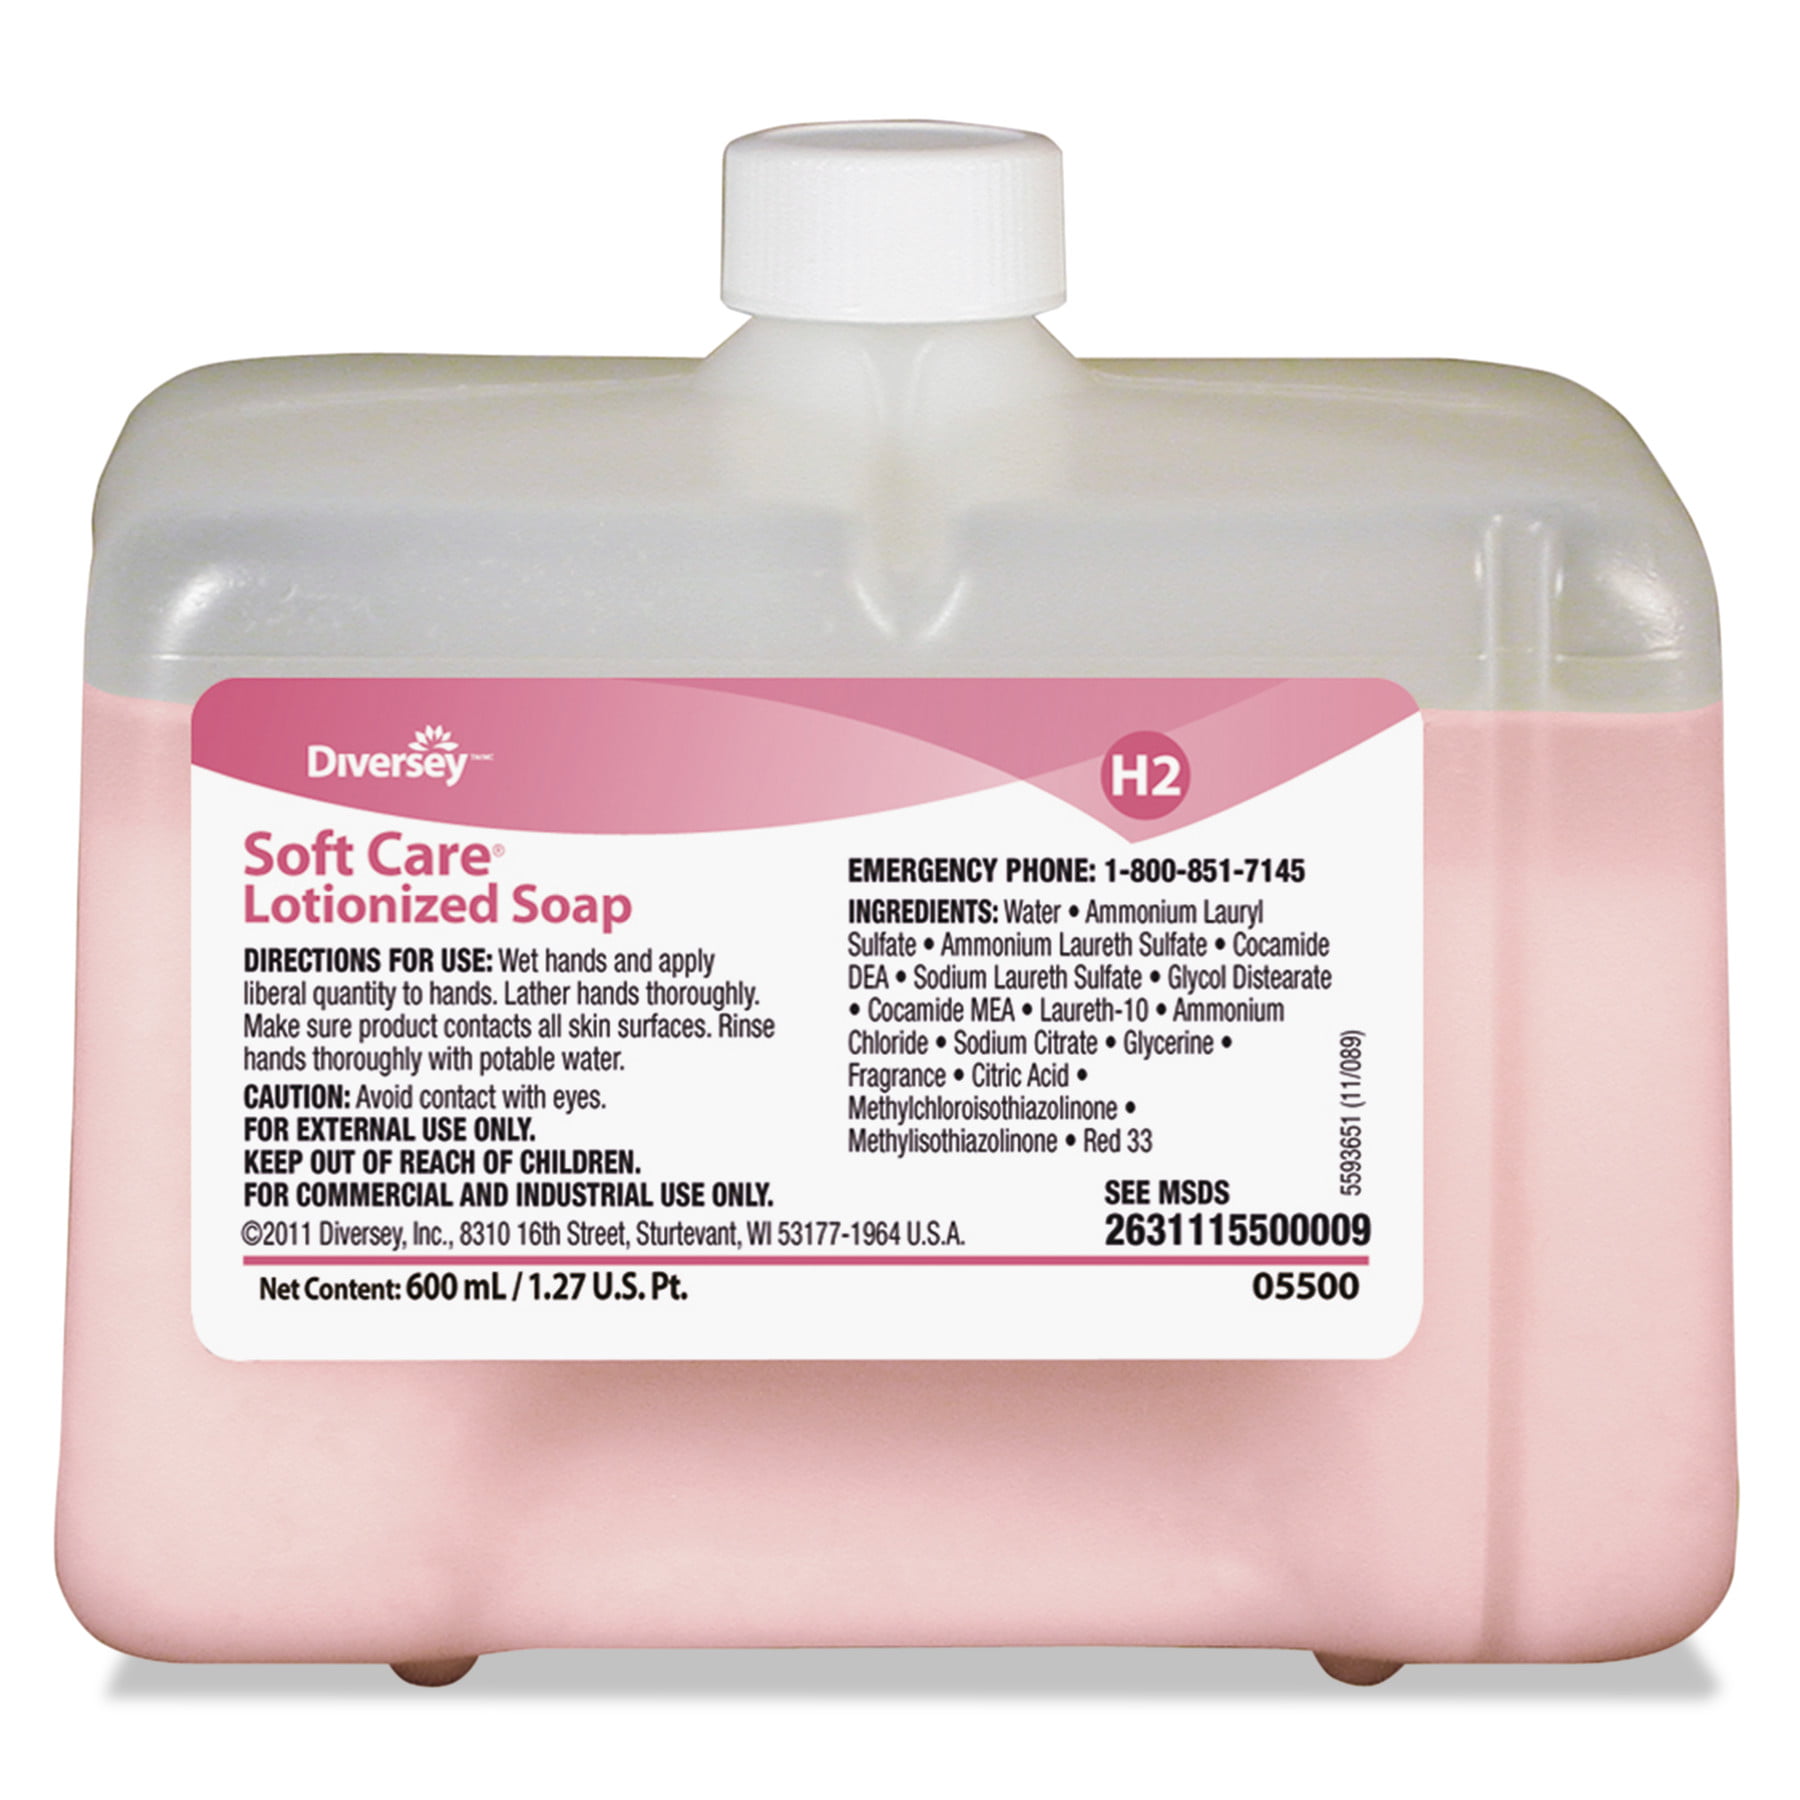 Caress перевод. Soft Soap. Diversey салфетница. Чехол Soft Care. Safe and Care Soap жидкое мыло.